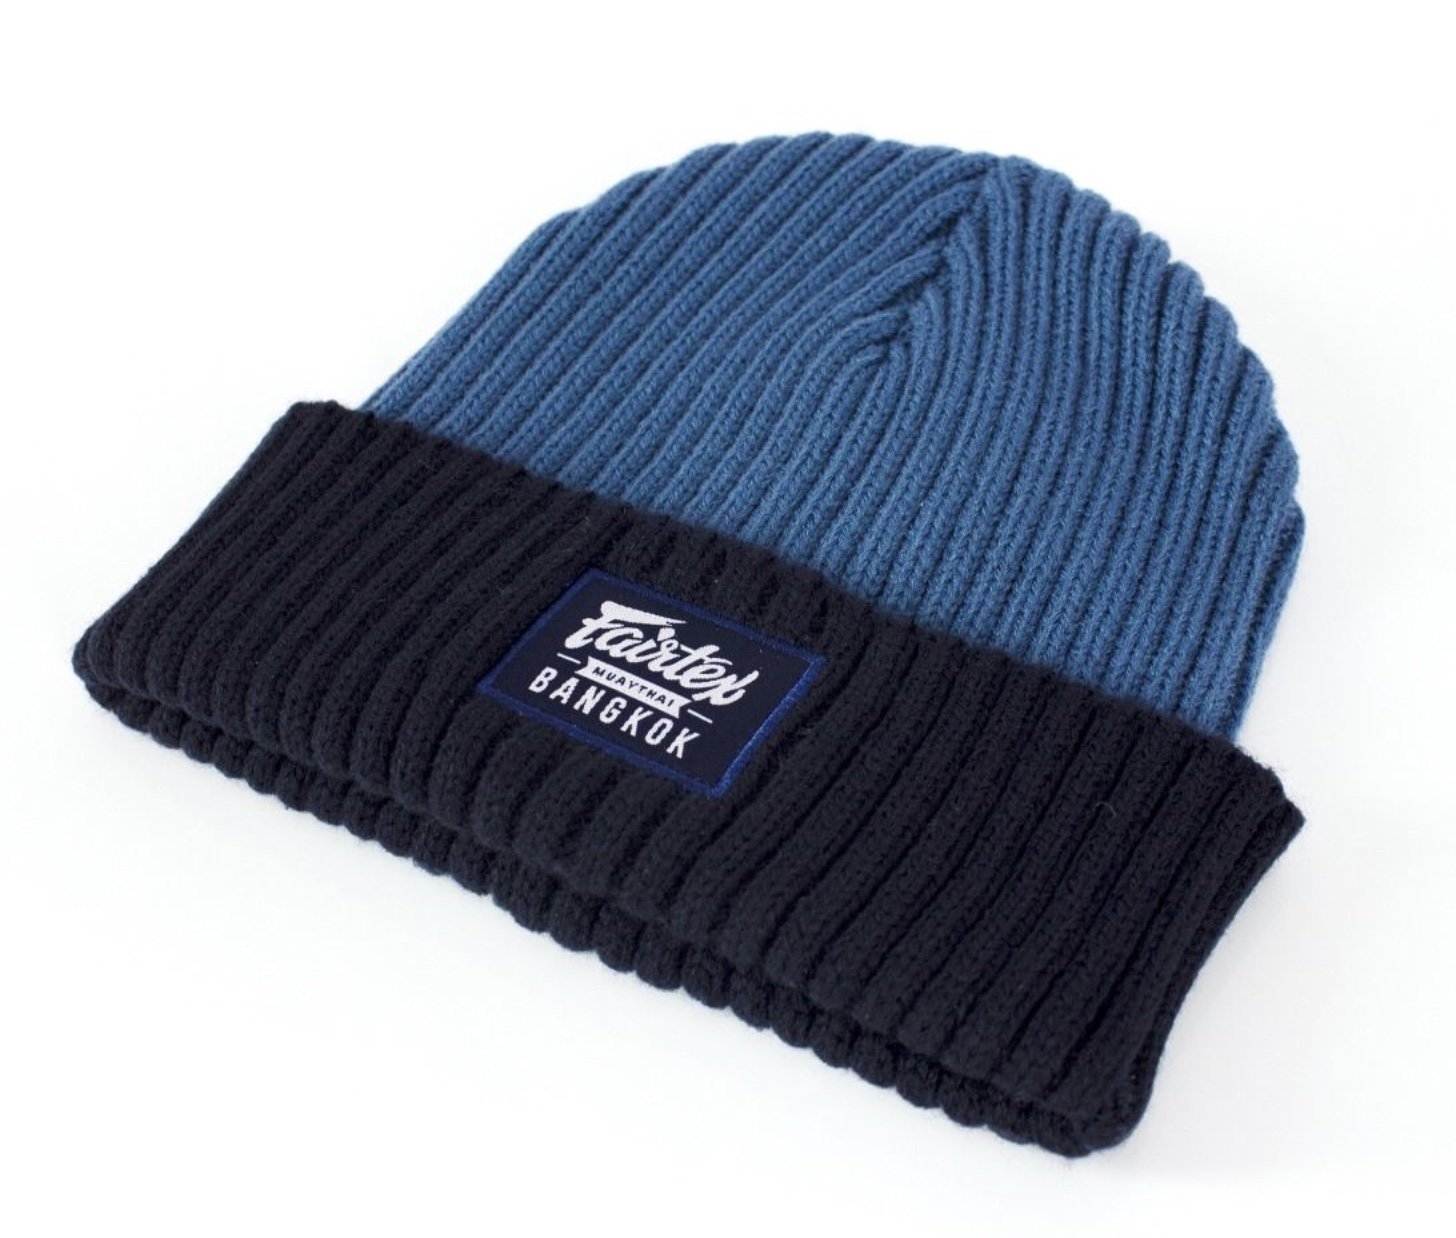 Fairtex Beanie Winter Hat - BN7 - Blue - Nylon Bag Packaging Included - image 3 of 6